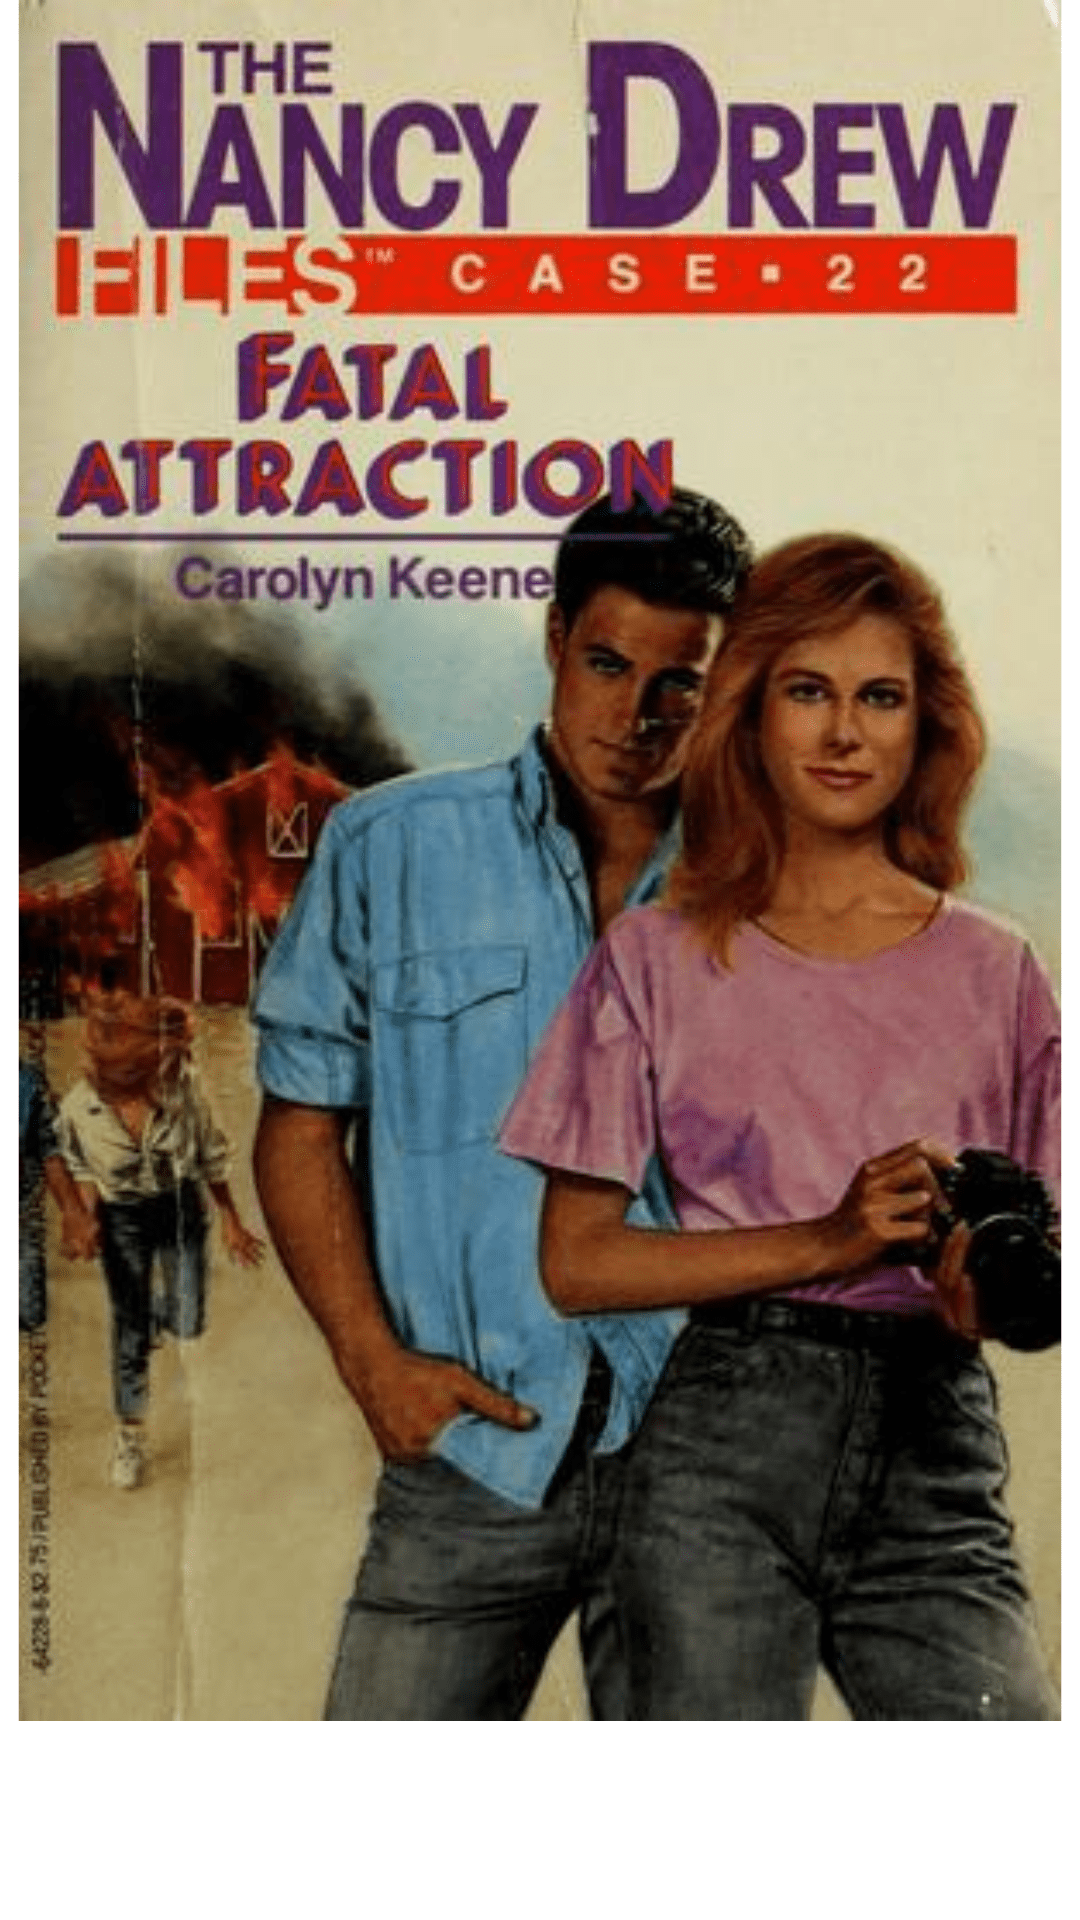 Nancy Drew Files #22: Fatal Attraction